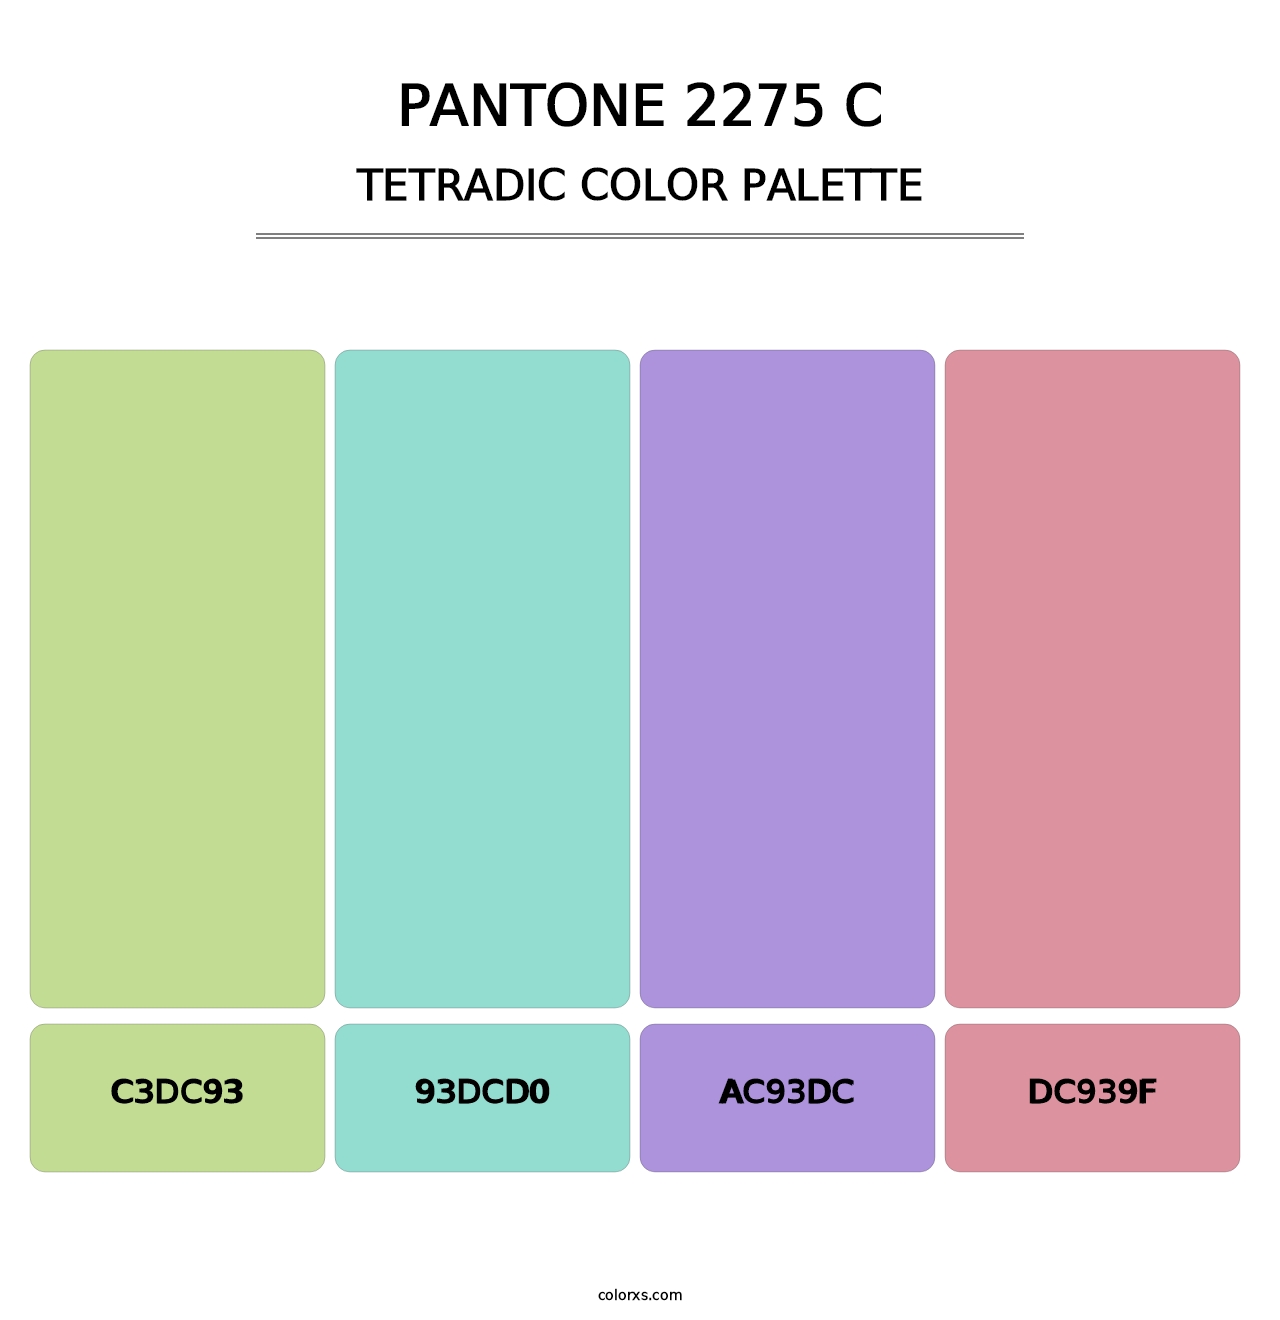 PANTONE 2275 C - Tetradic Color Palette